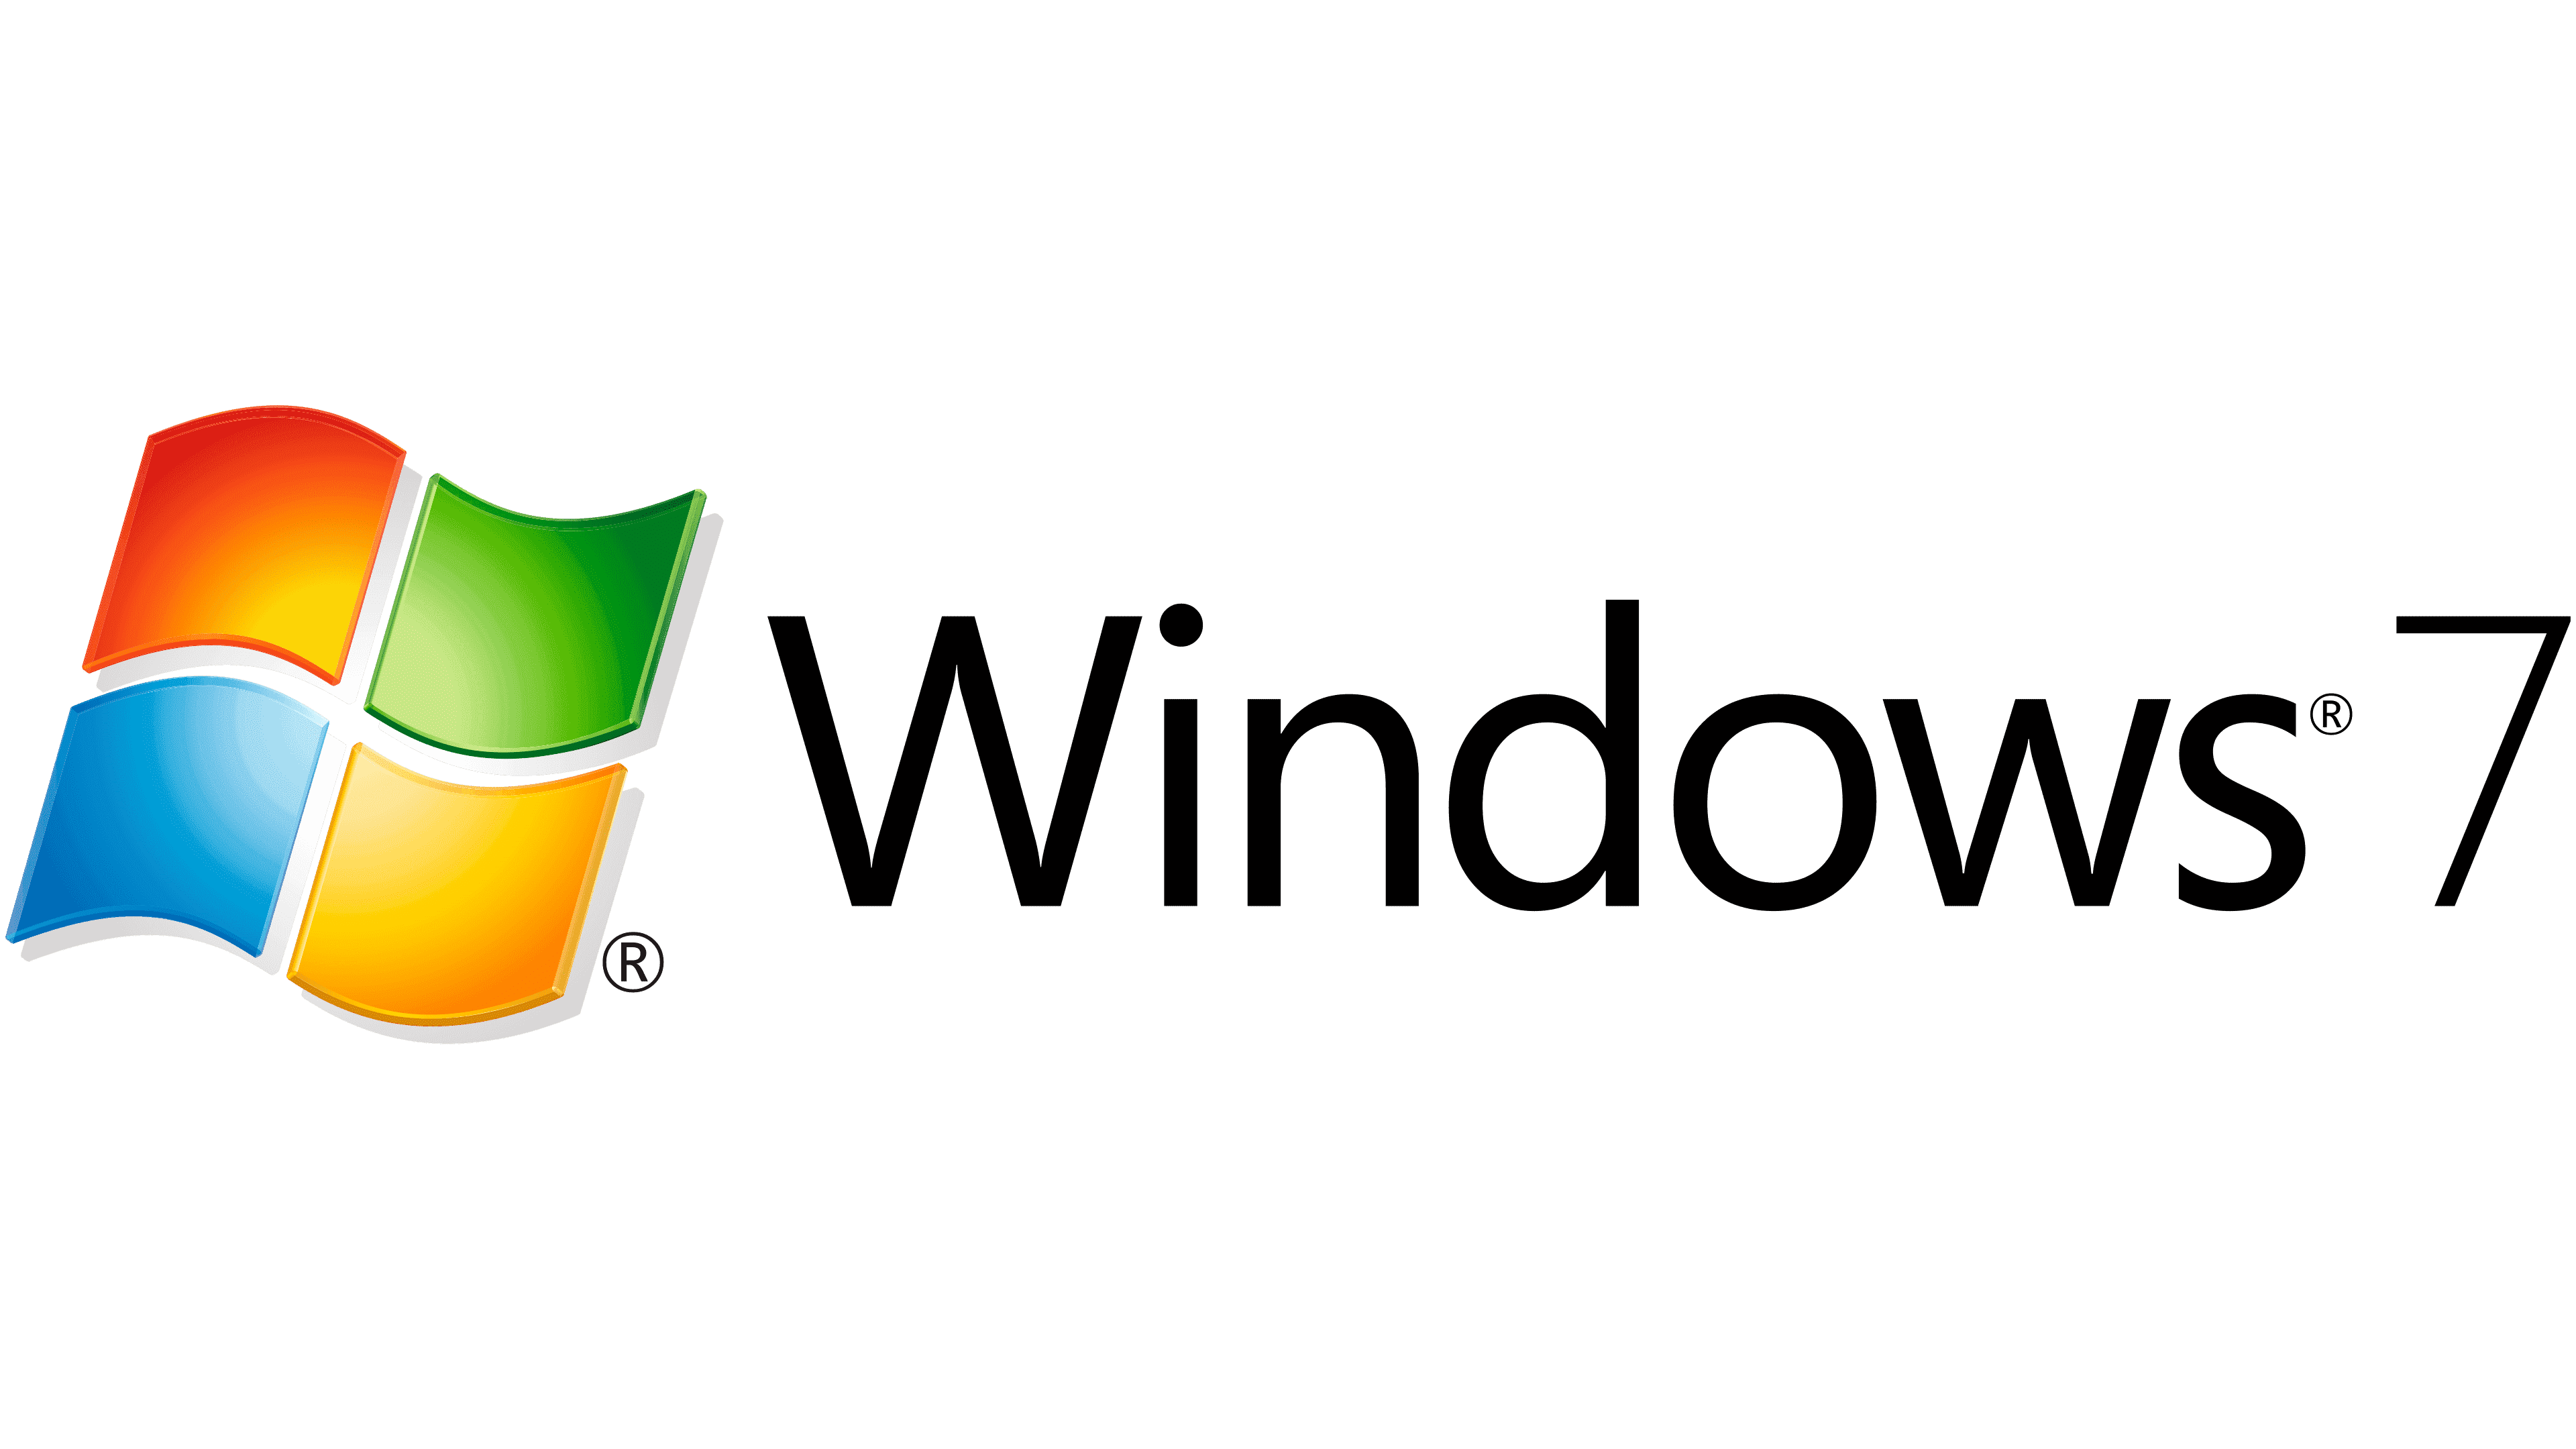 Download Windows 7 Logo On A Dark Background Wallpaper | Wallpapers.com